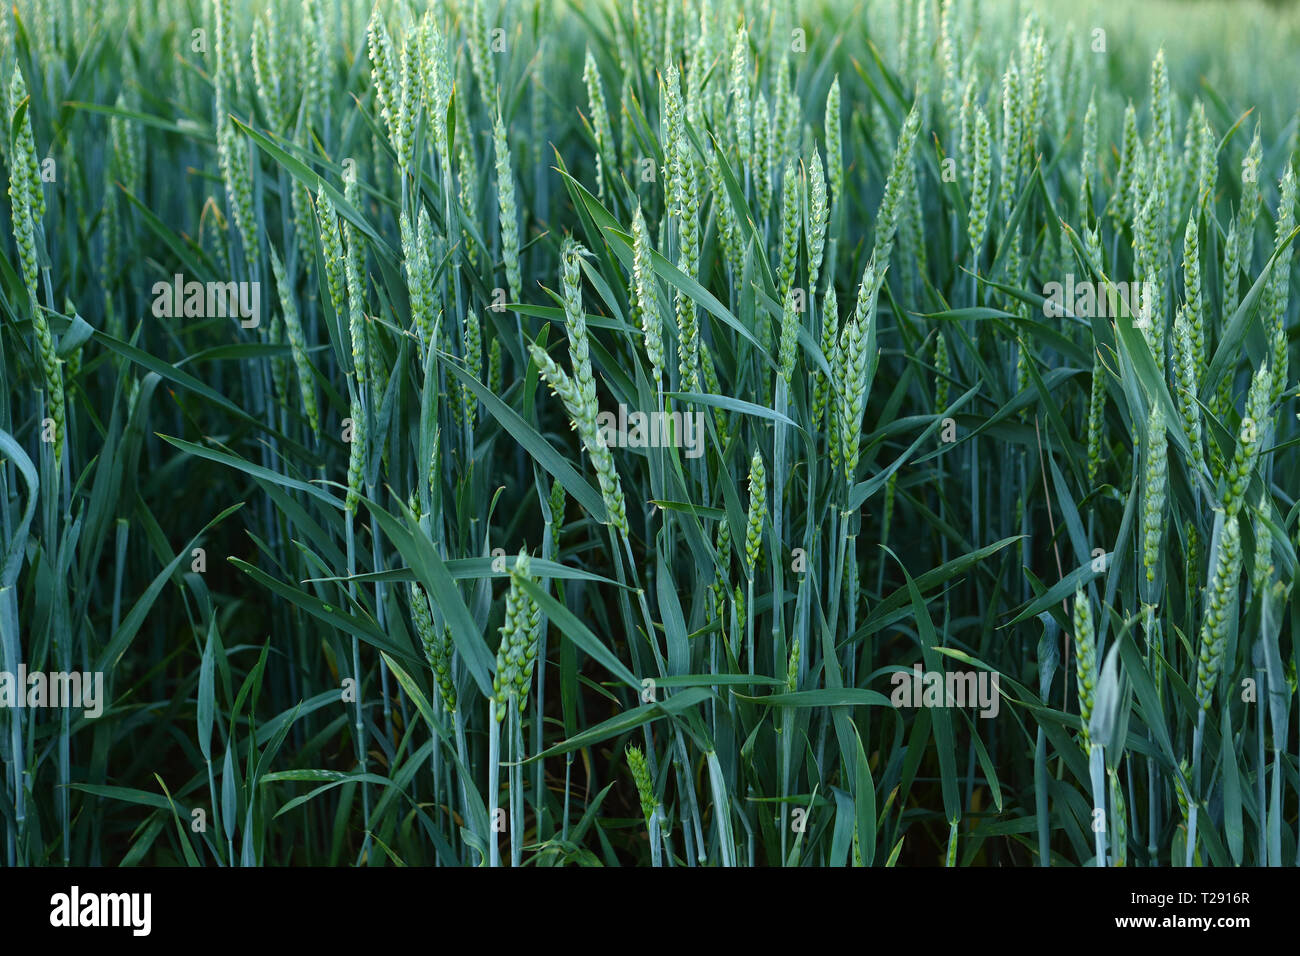 Green wheats growing in row Stock Photo - Alamy